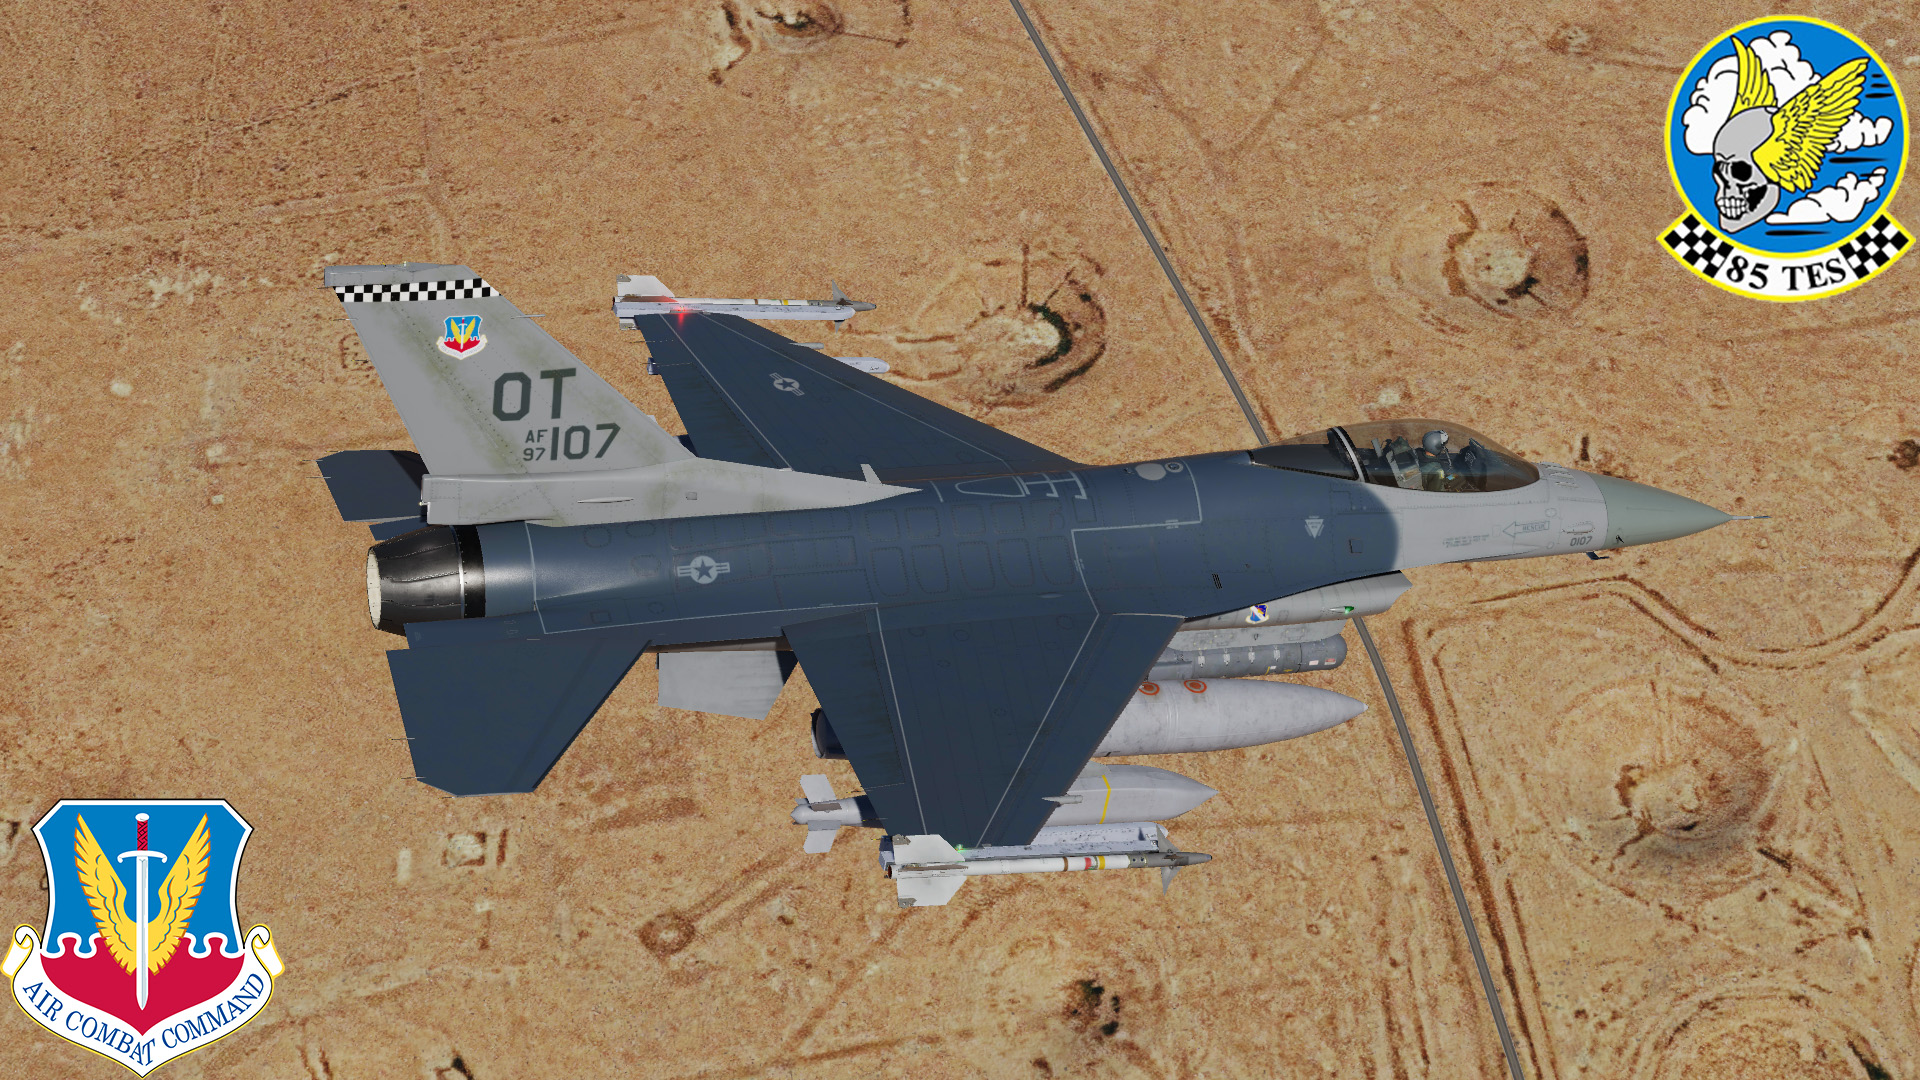 85th Test & Evaluation Squadron 'Skulls' F-16C 97-0107 